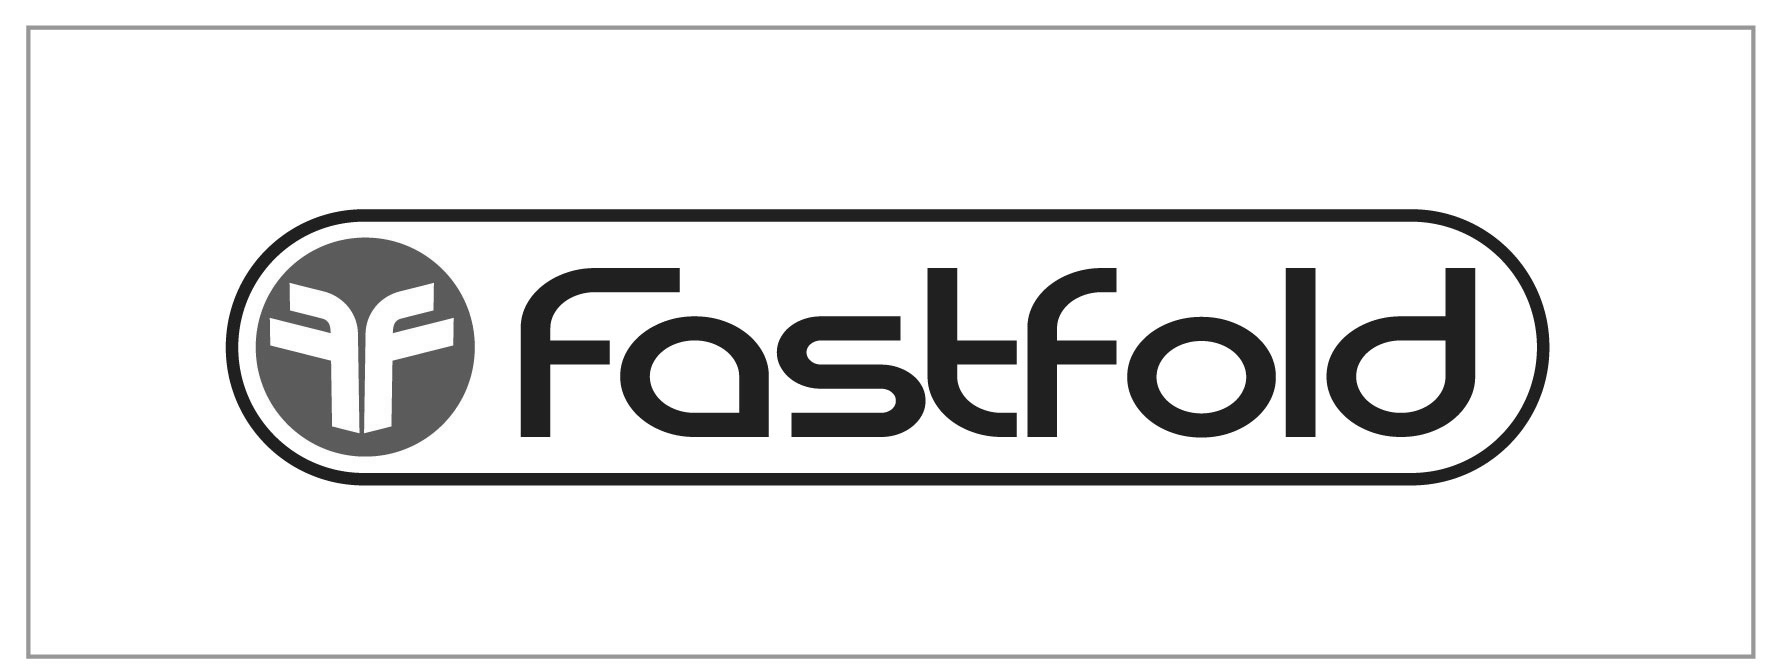 FastFold